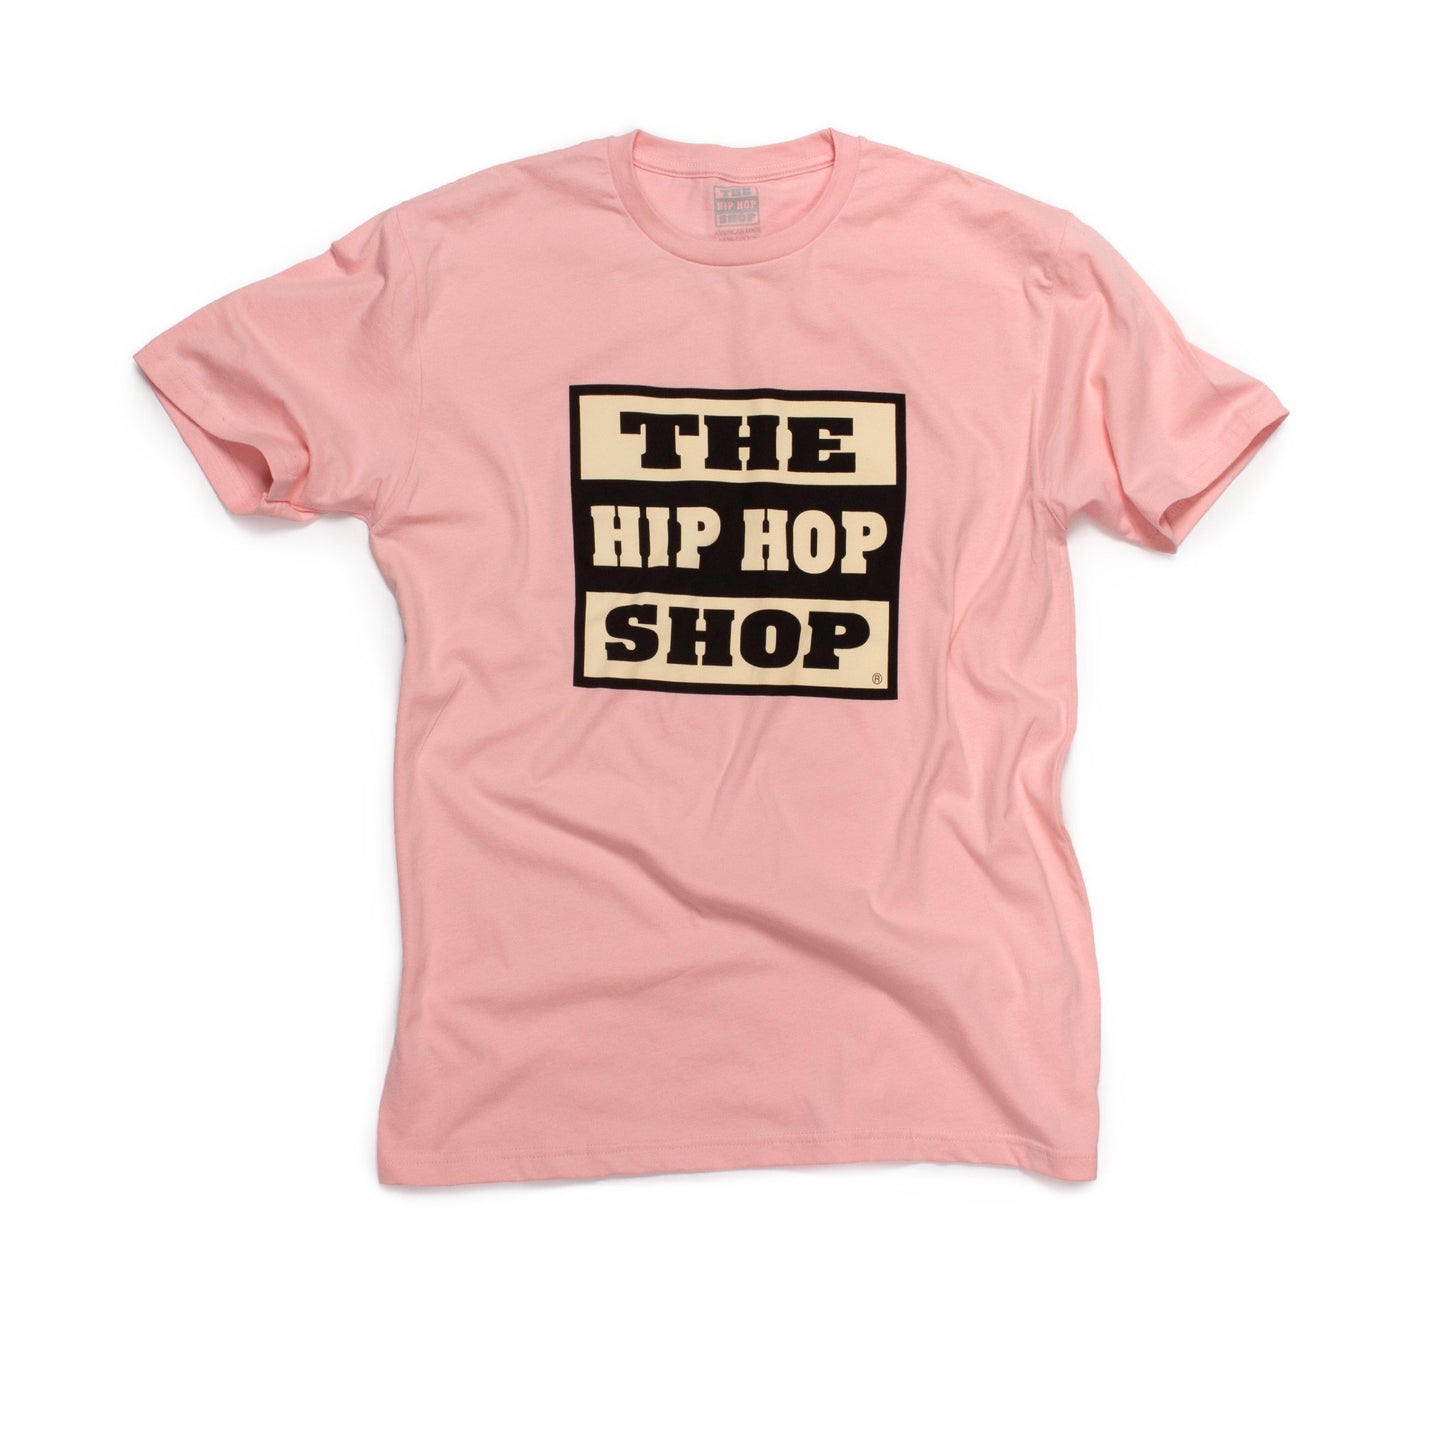 The Hip Hop Shop pink t-shirt